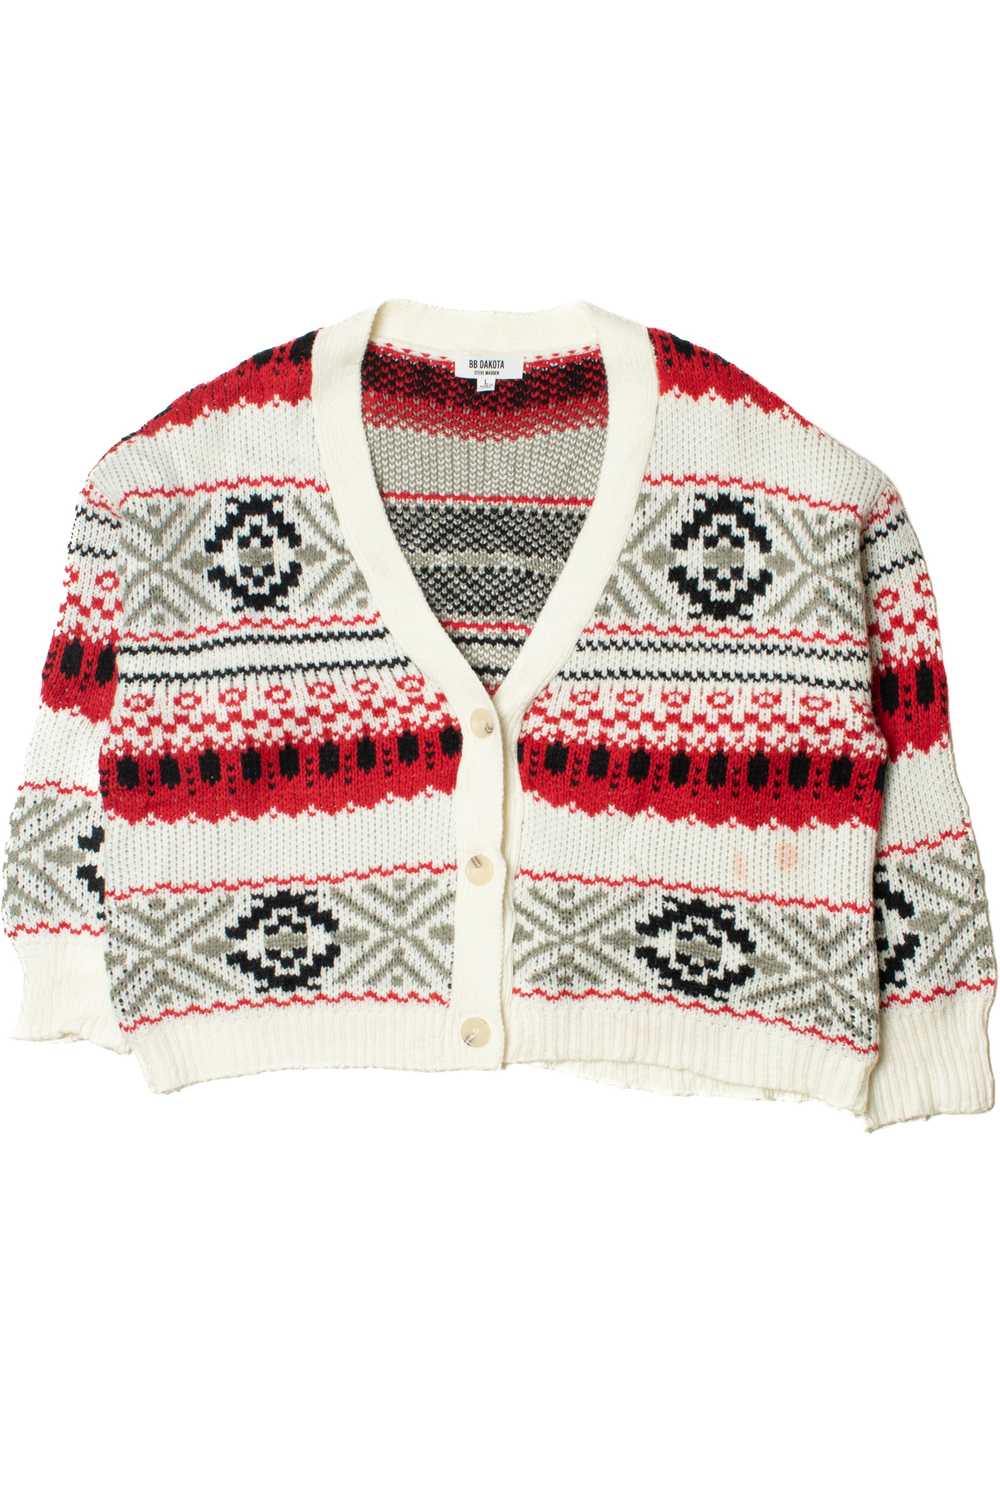 BB Dakota Geometric Pattern Cardigan Sweater - image 1